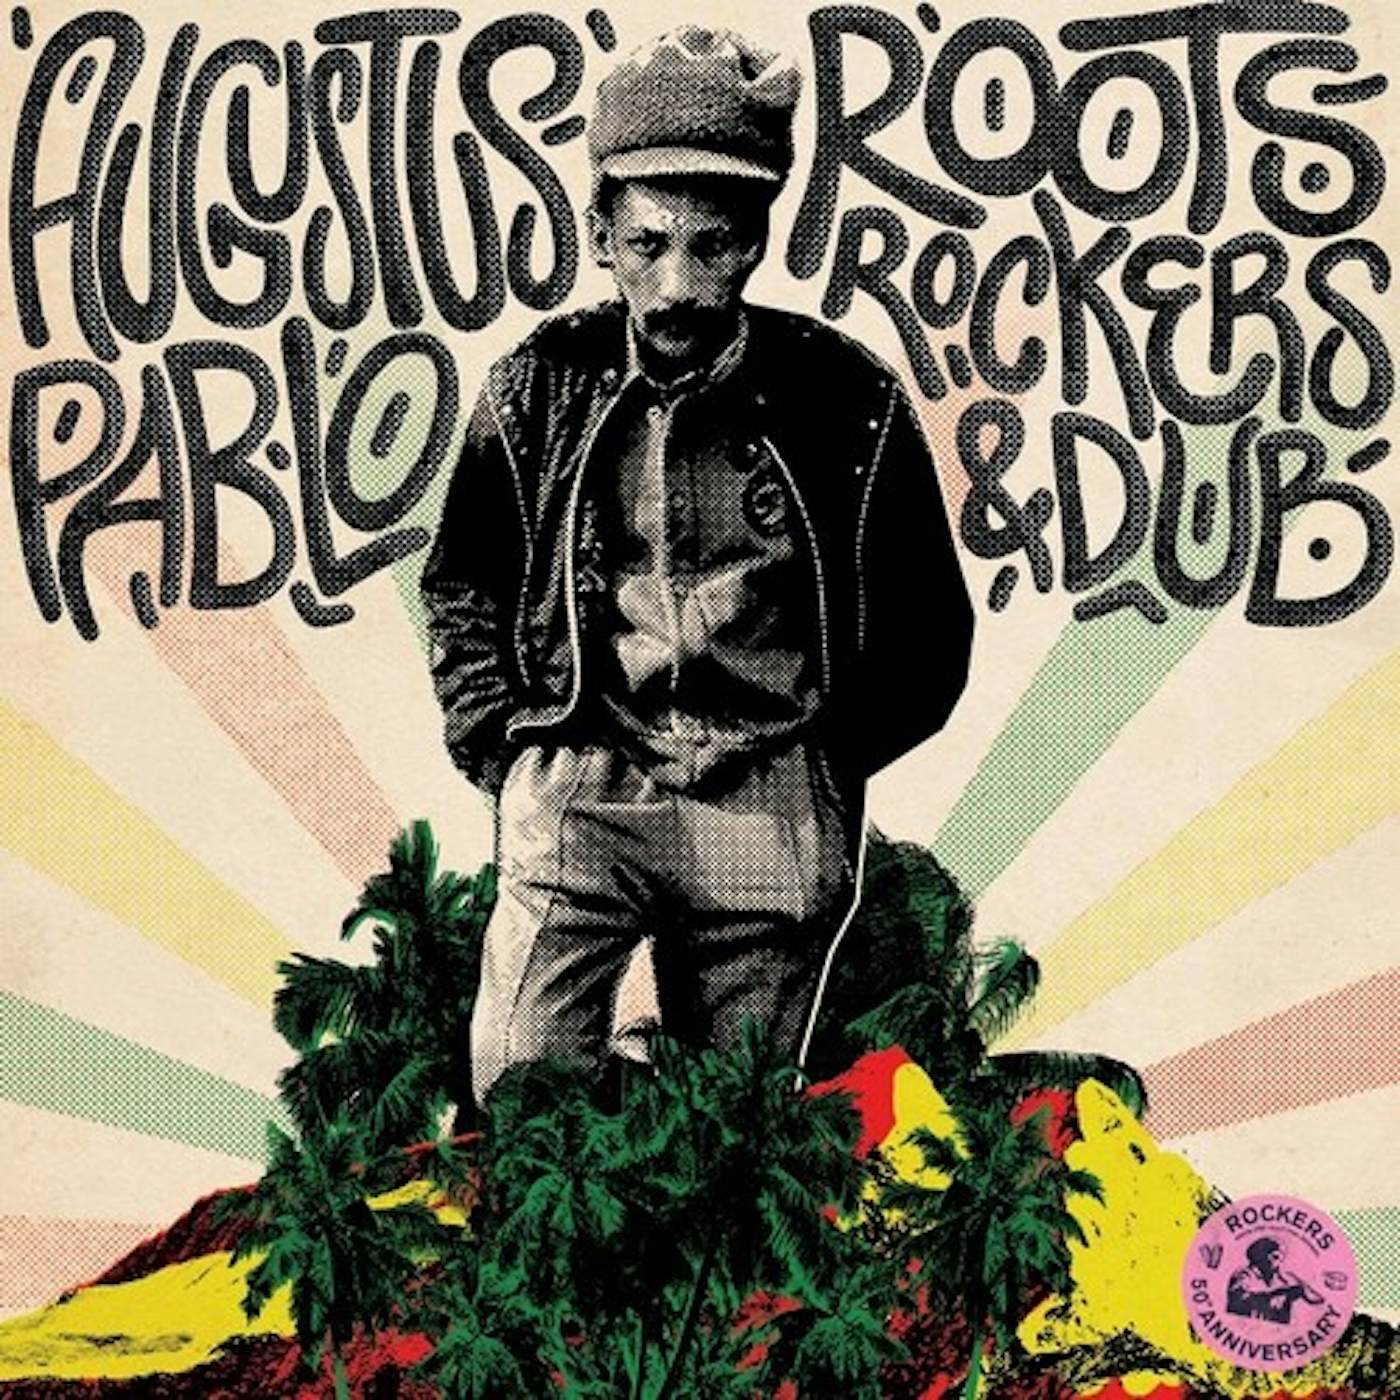 Augustus Pablo Roots Rockers & Dub Vinyl Record